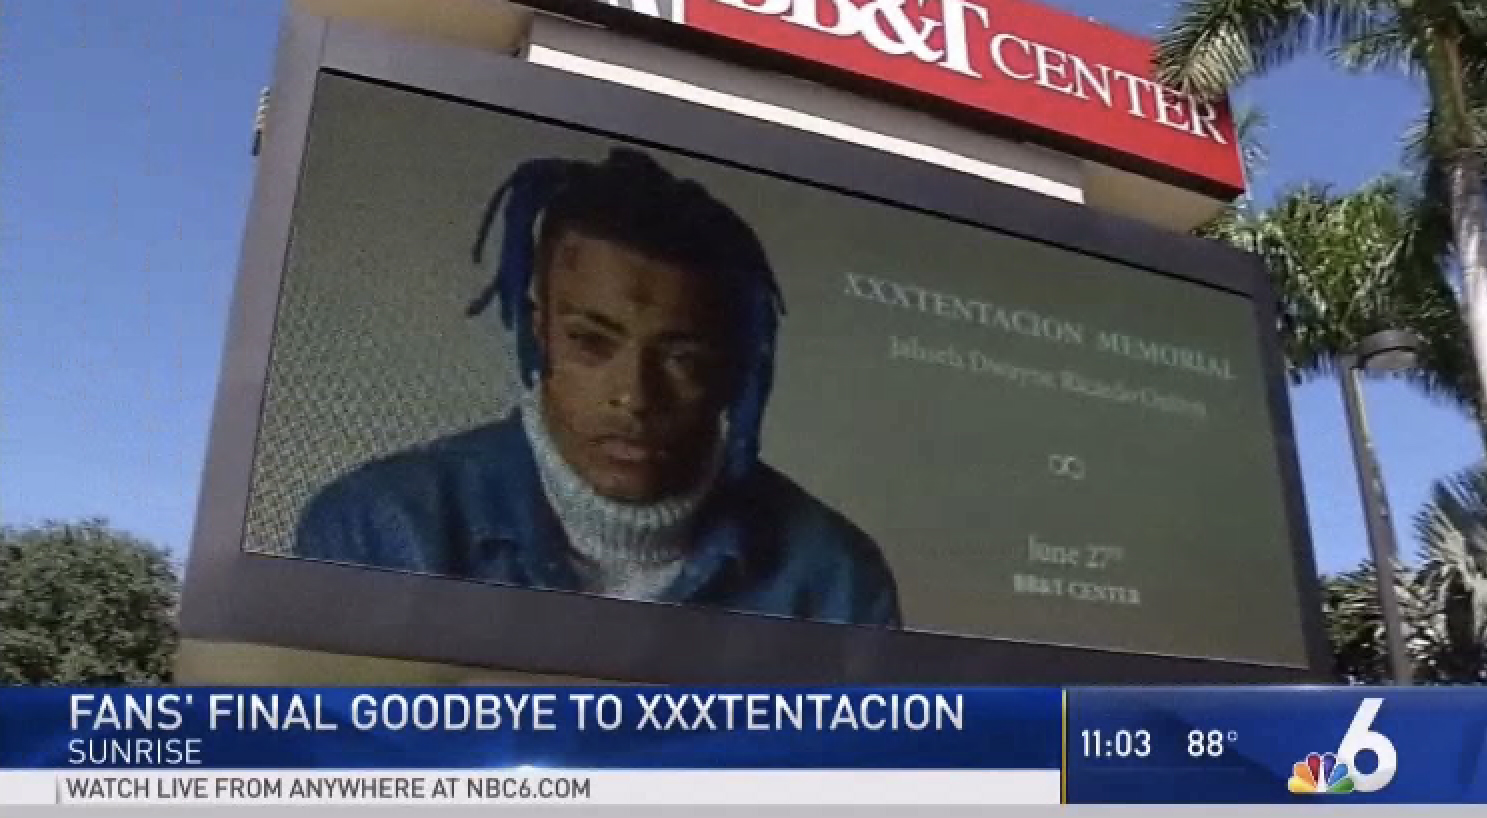 Xxx Tentacion Video Sex - XXXTentacion Remembered at Public Viewing in Sunrise â€“ NBC Boston